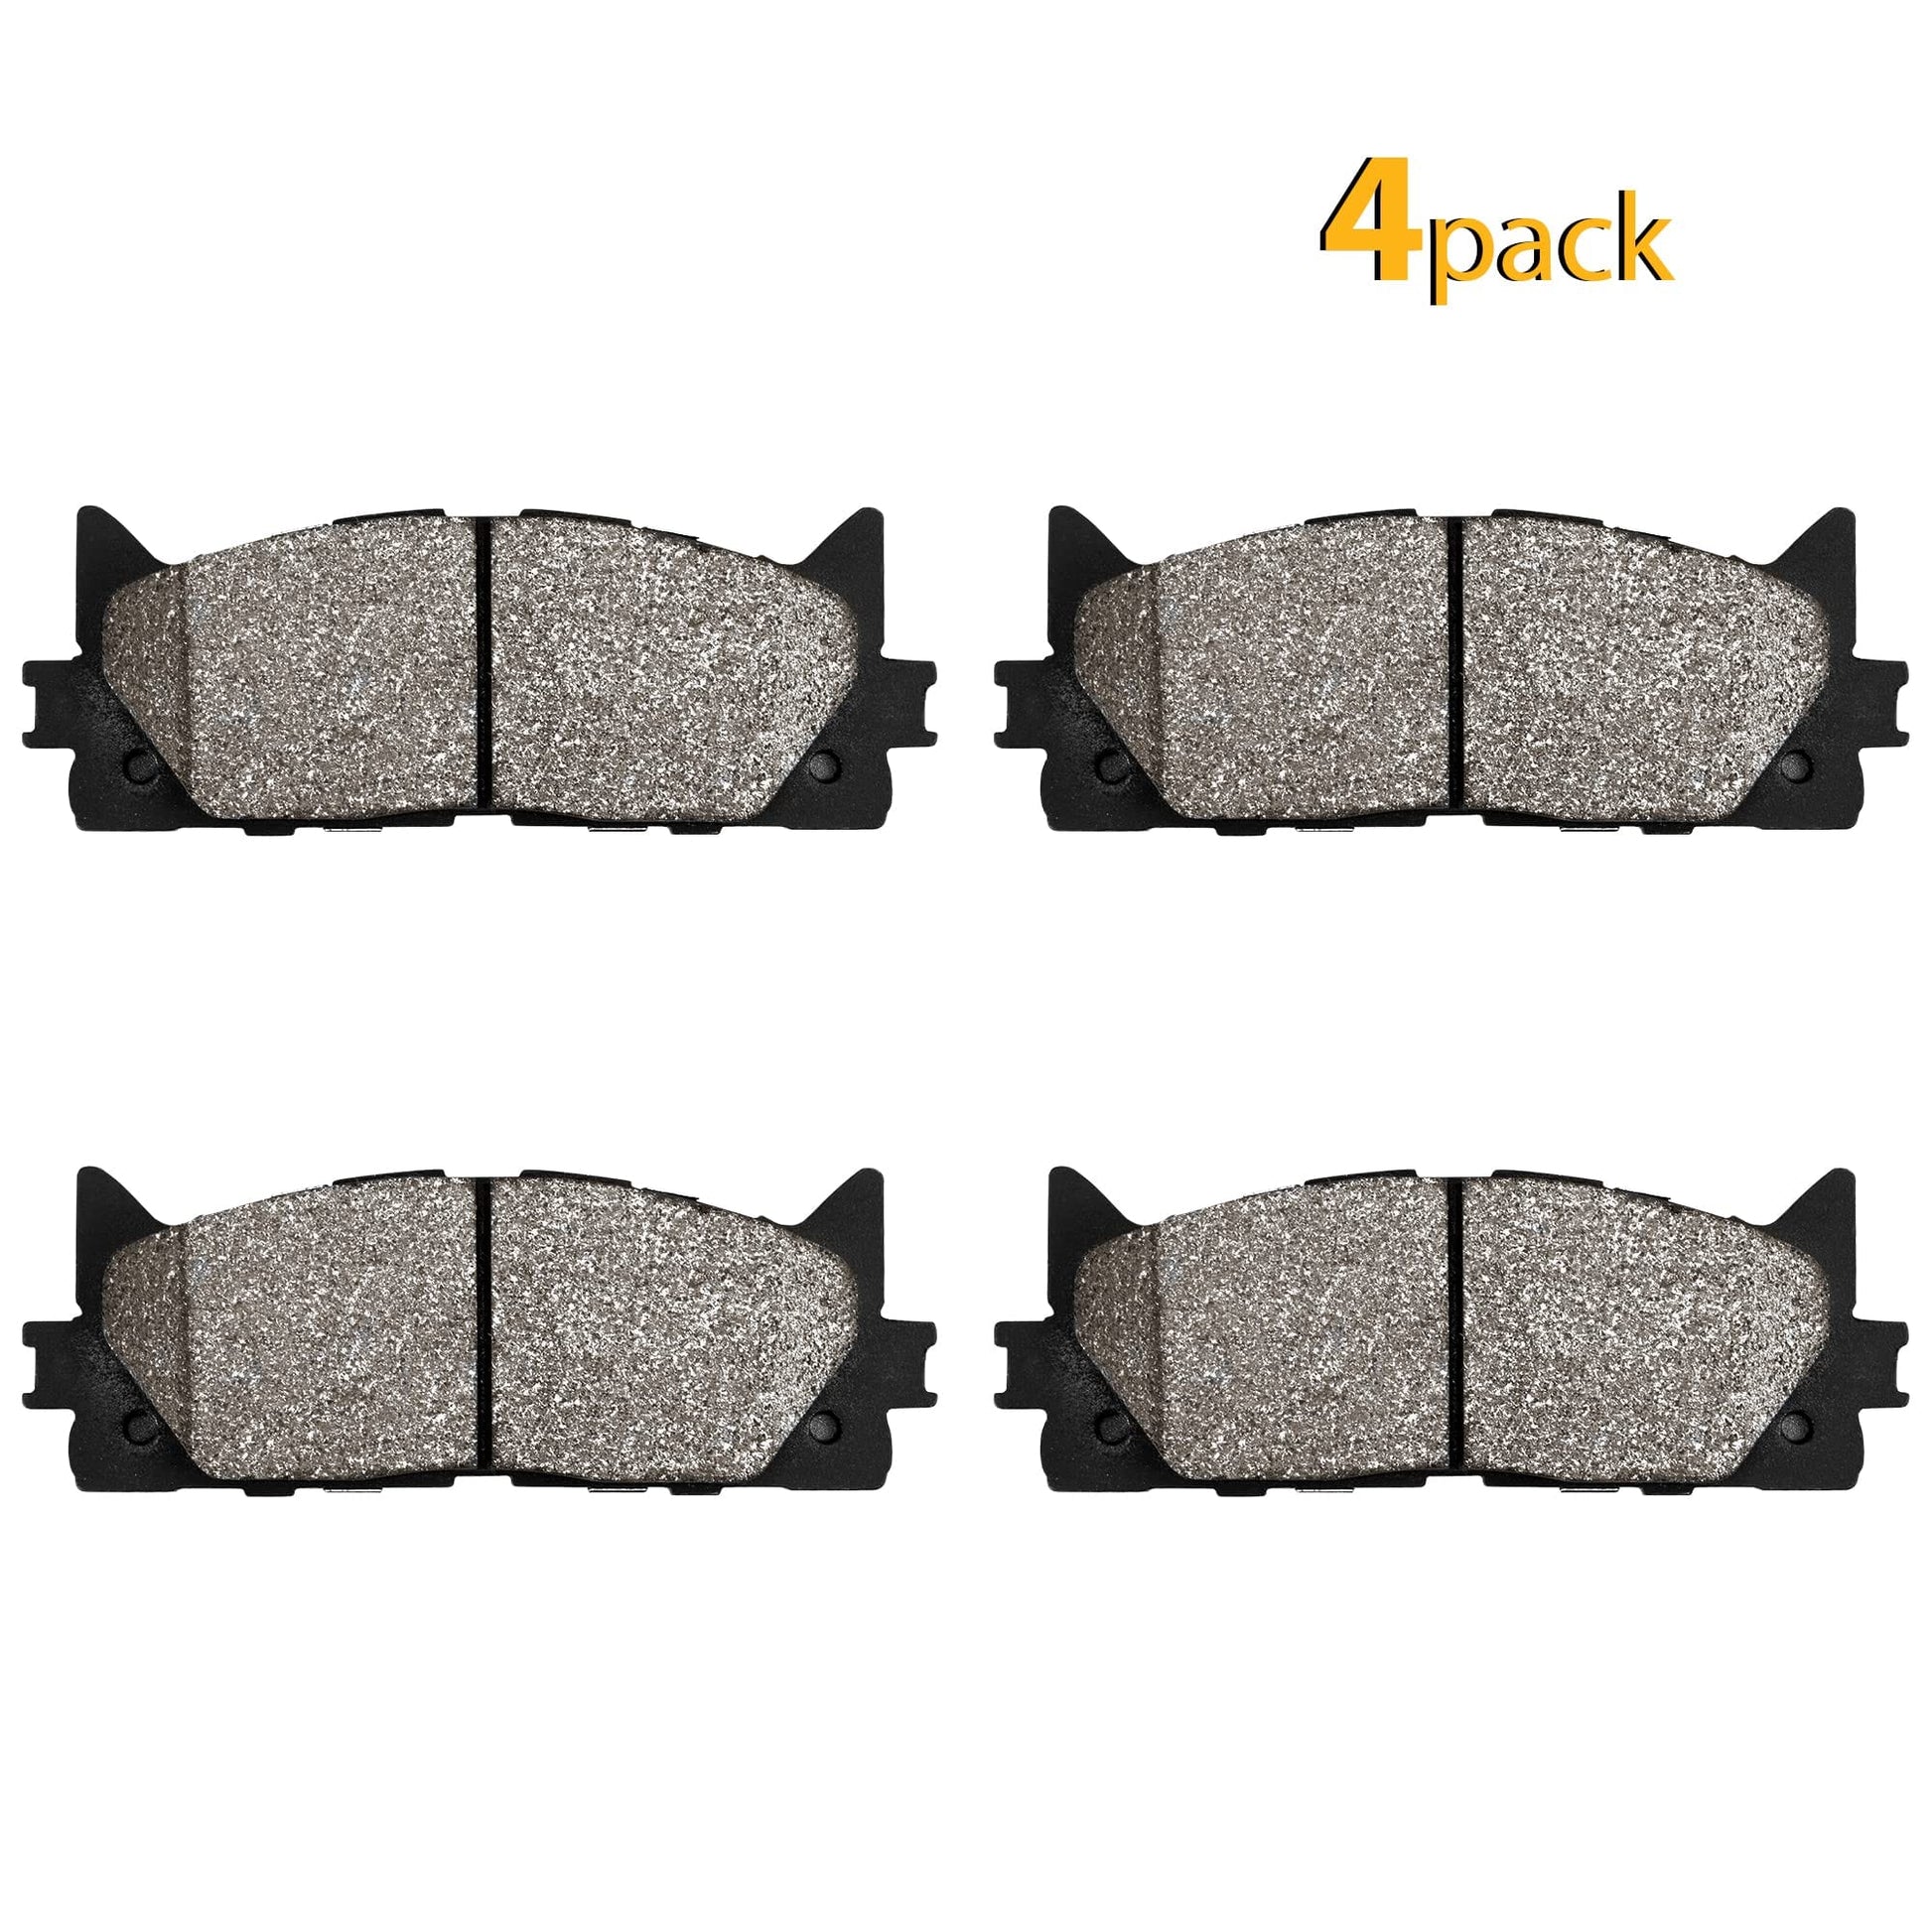 Rear Brake Pads 4Pcs Premium Ceramic Replacement Brake Pad Set